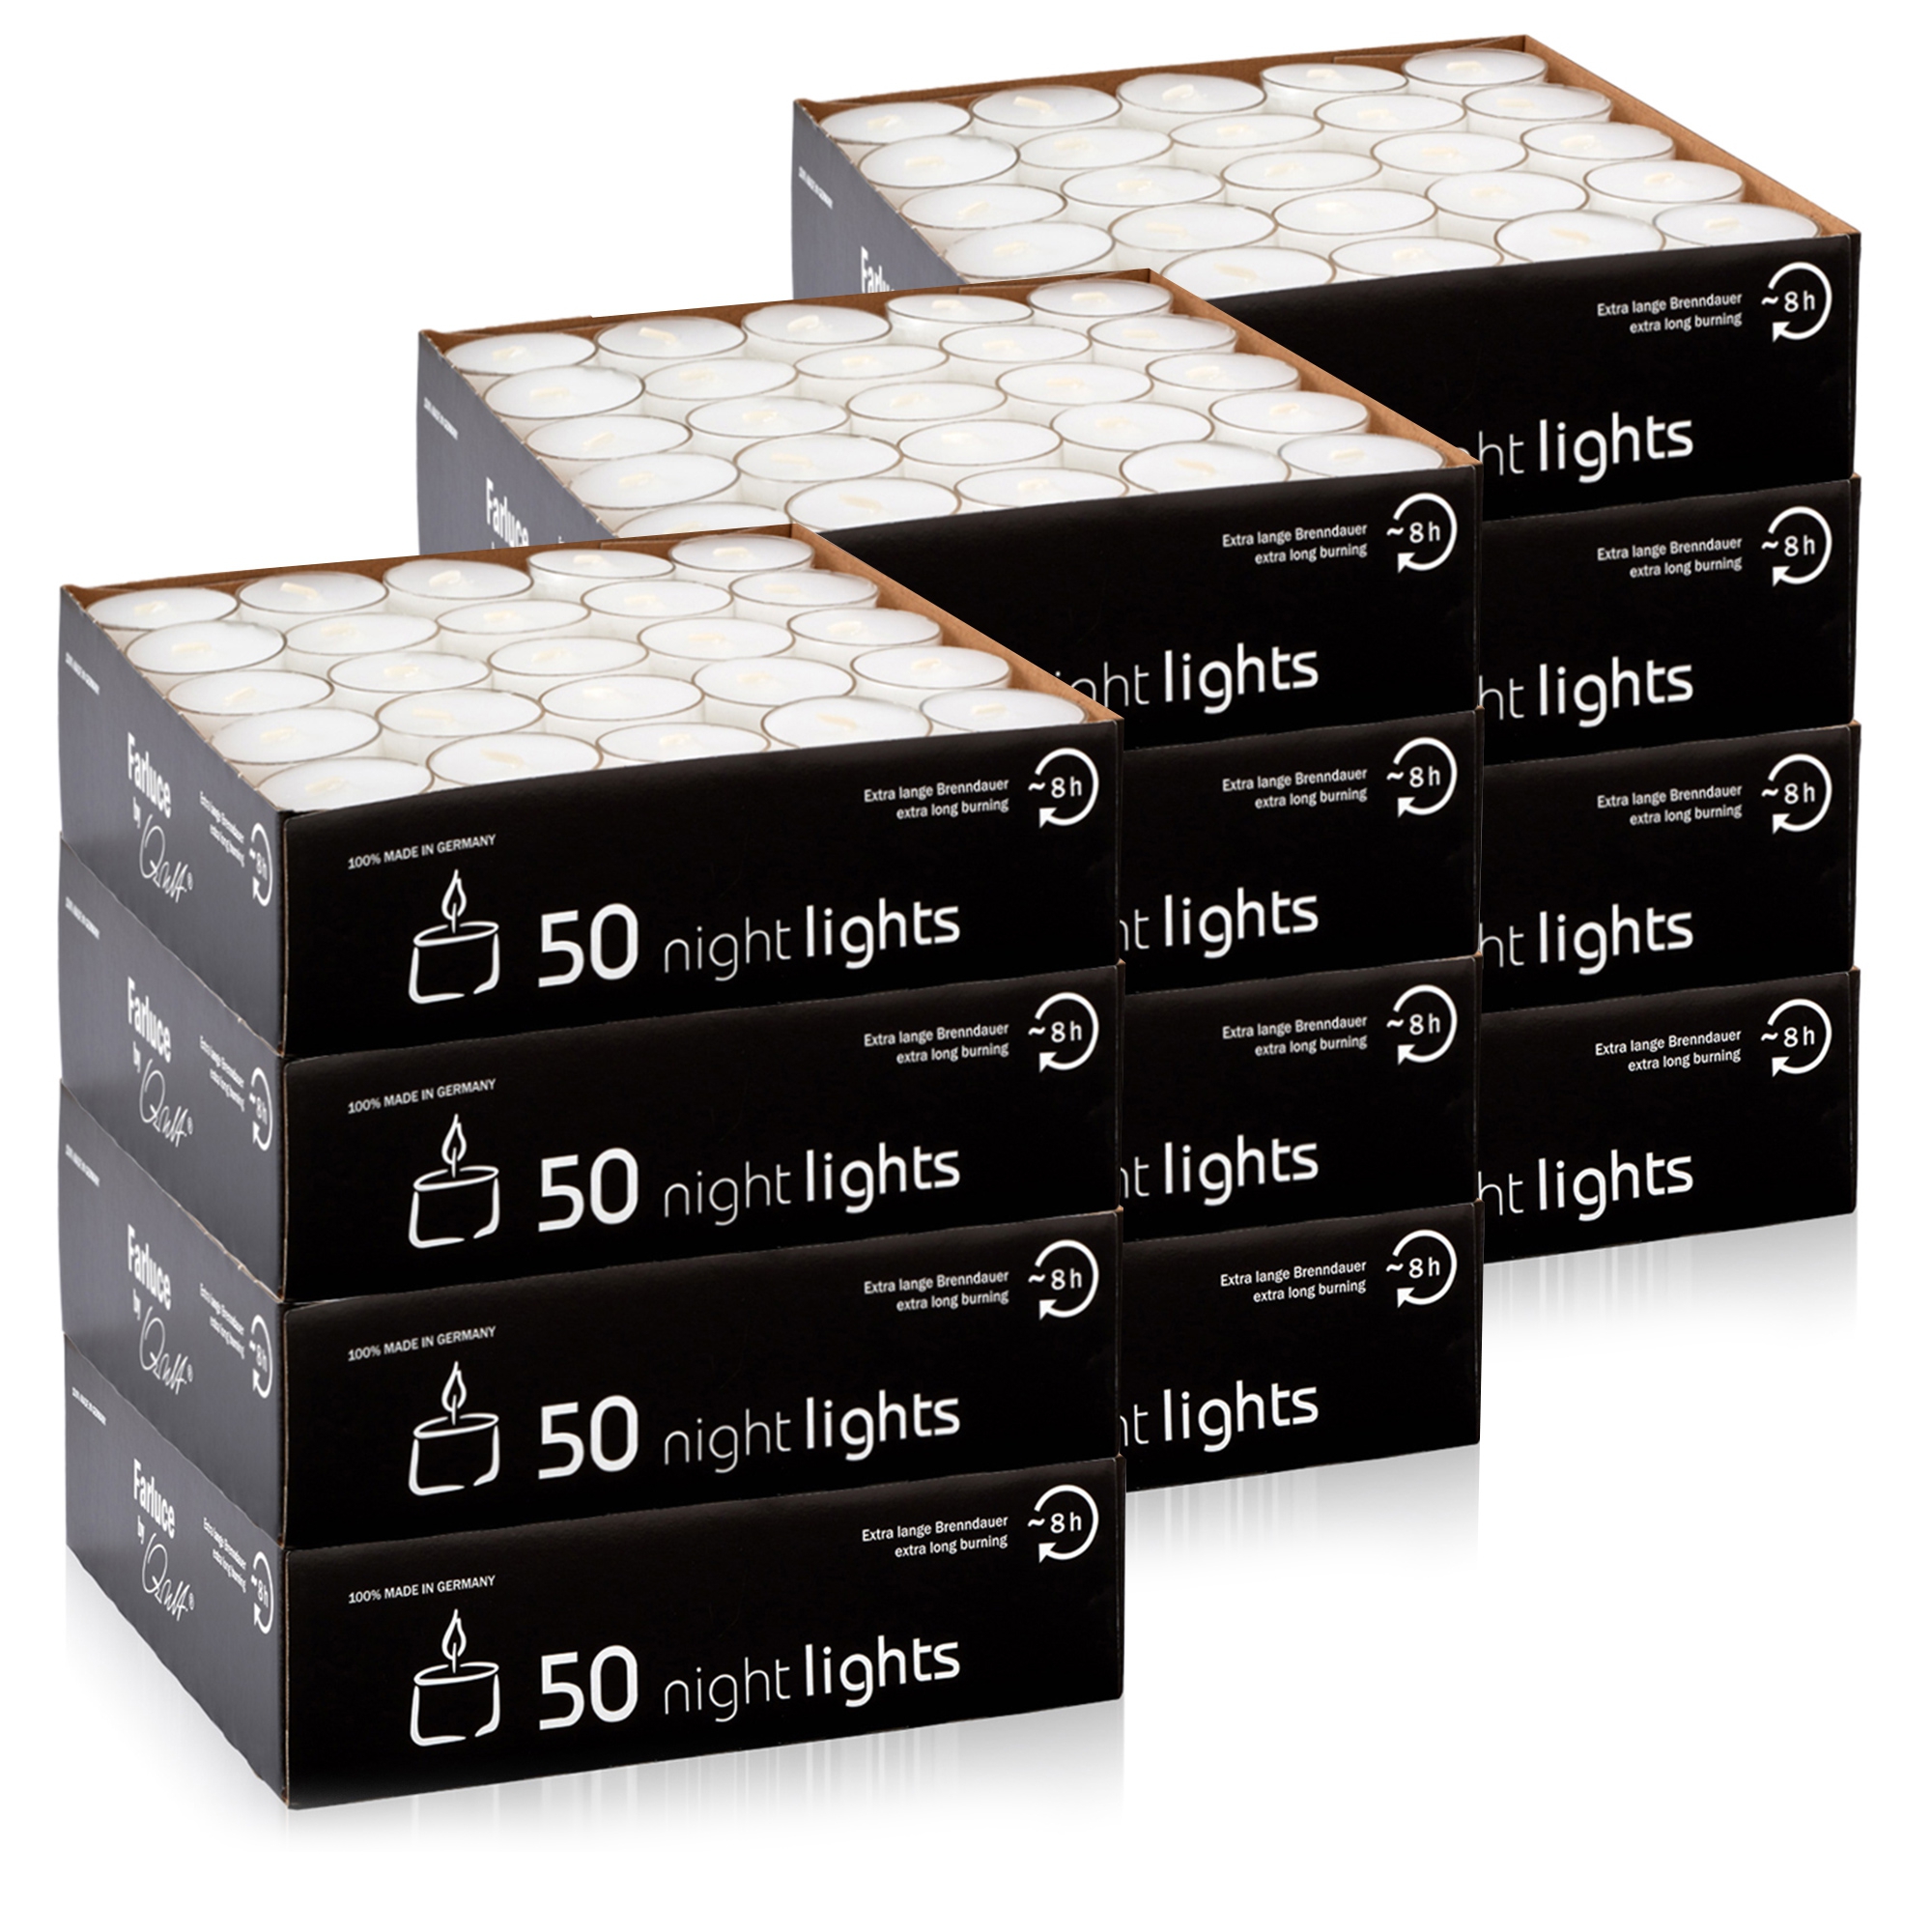 Qult Farluce Nightlights - 50 tealights - Ø 38 x 25 mm - White